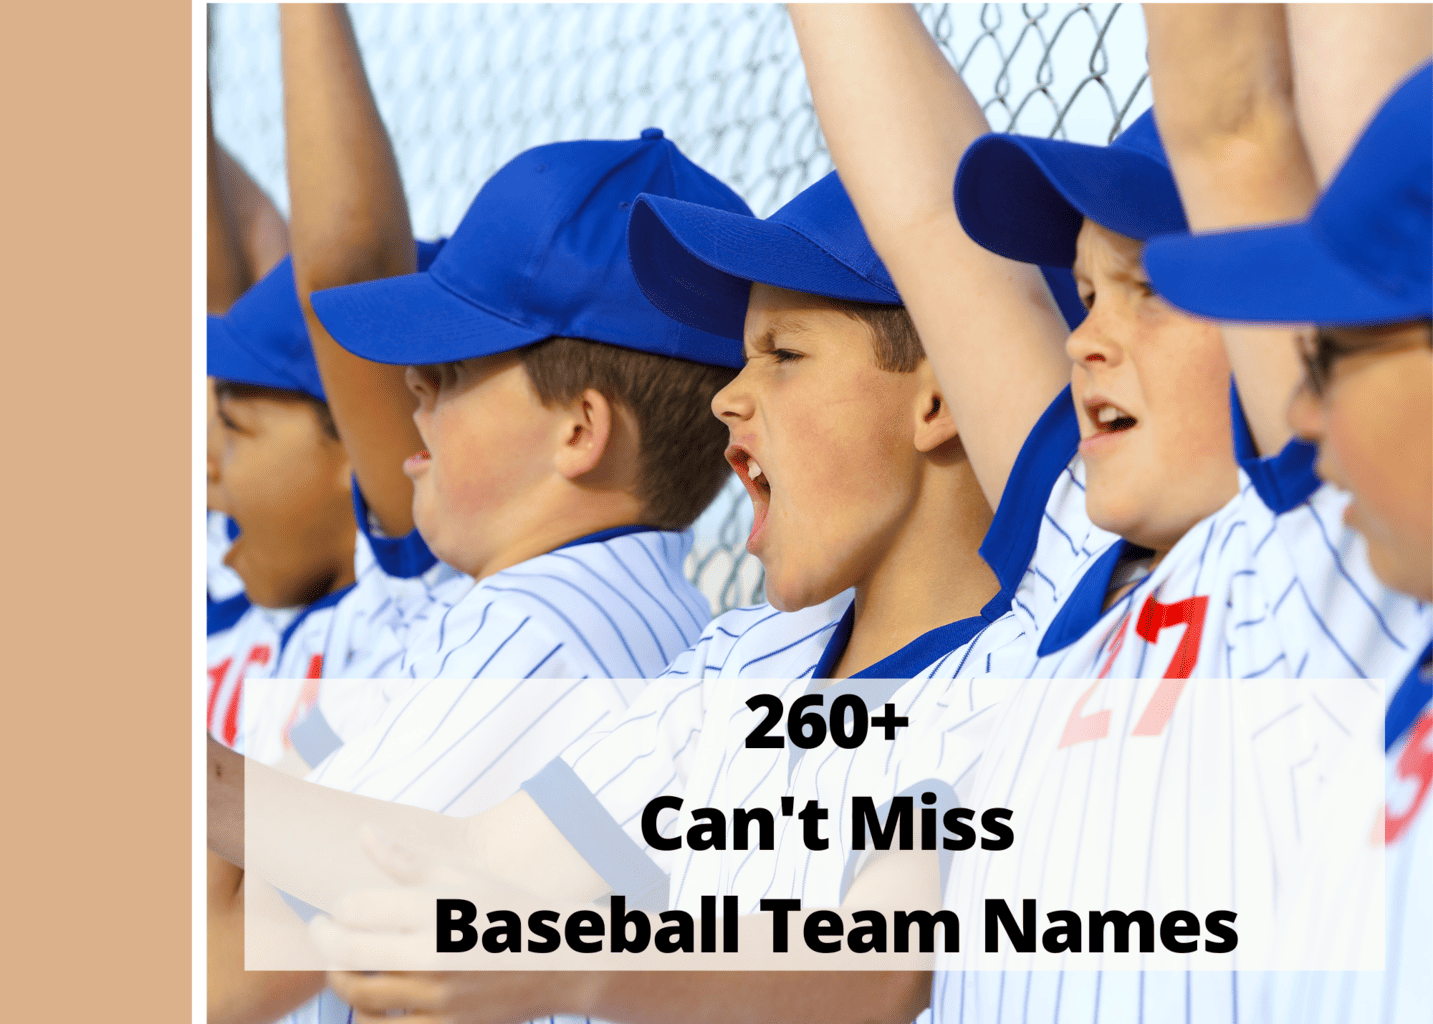 260+ Can't Miss Baseball Team Names